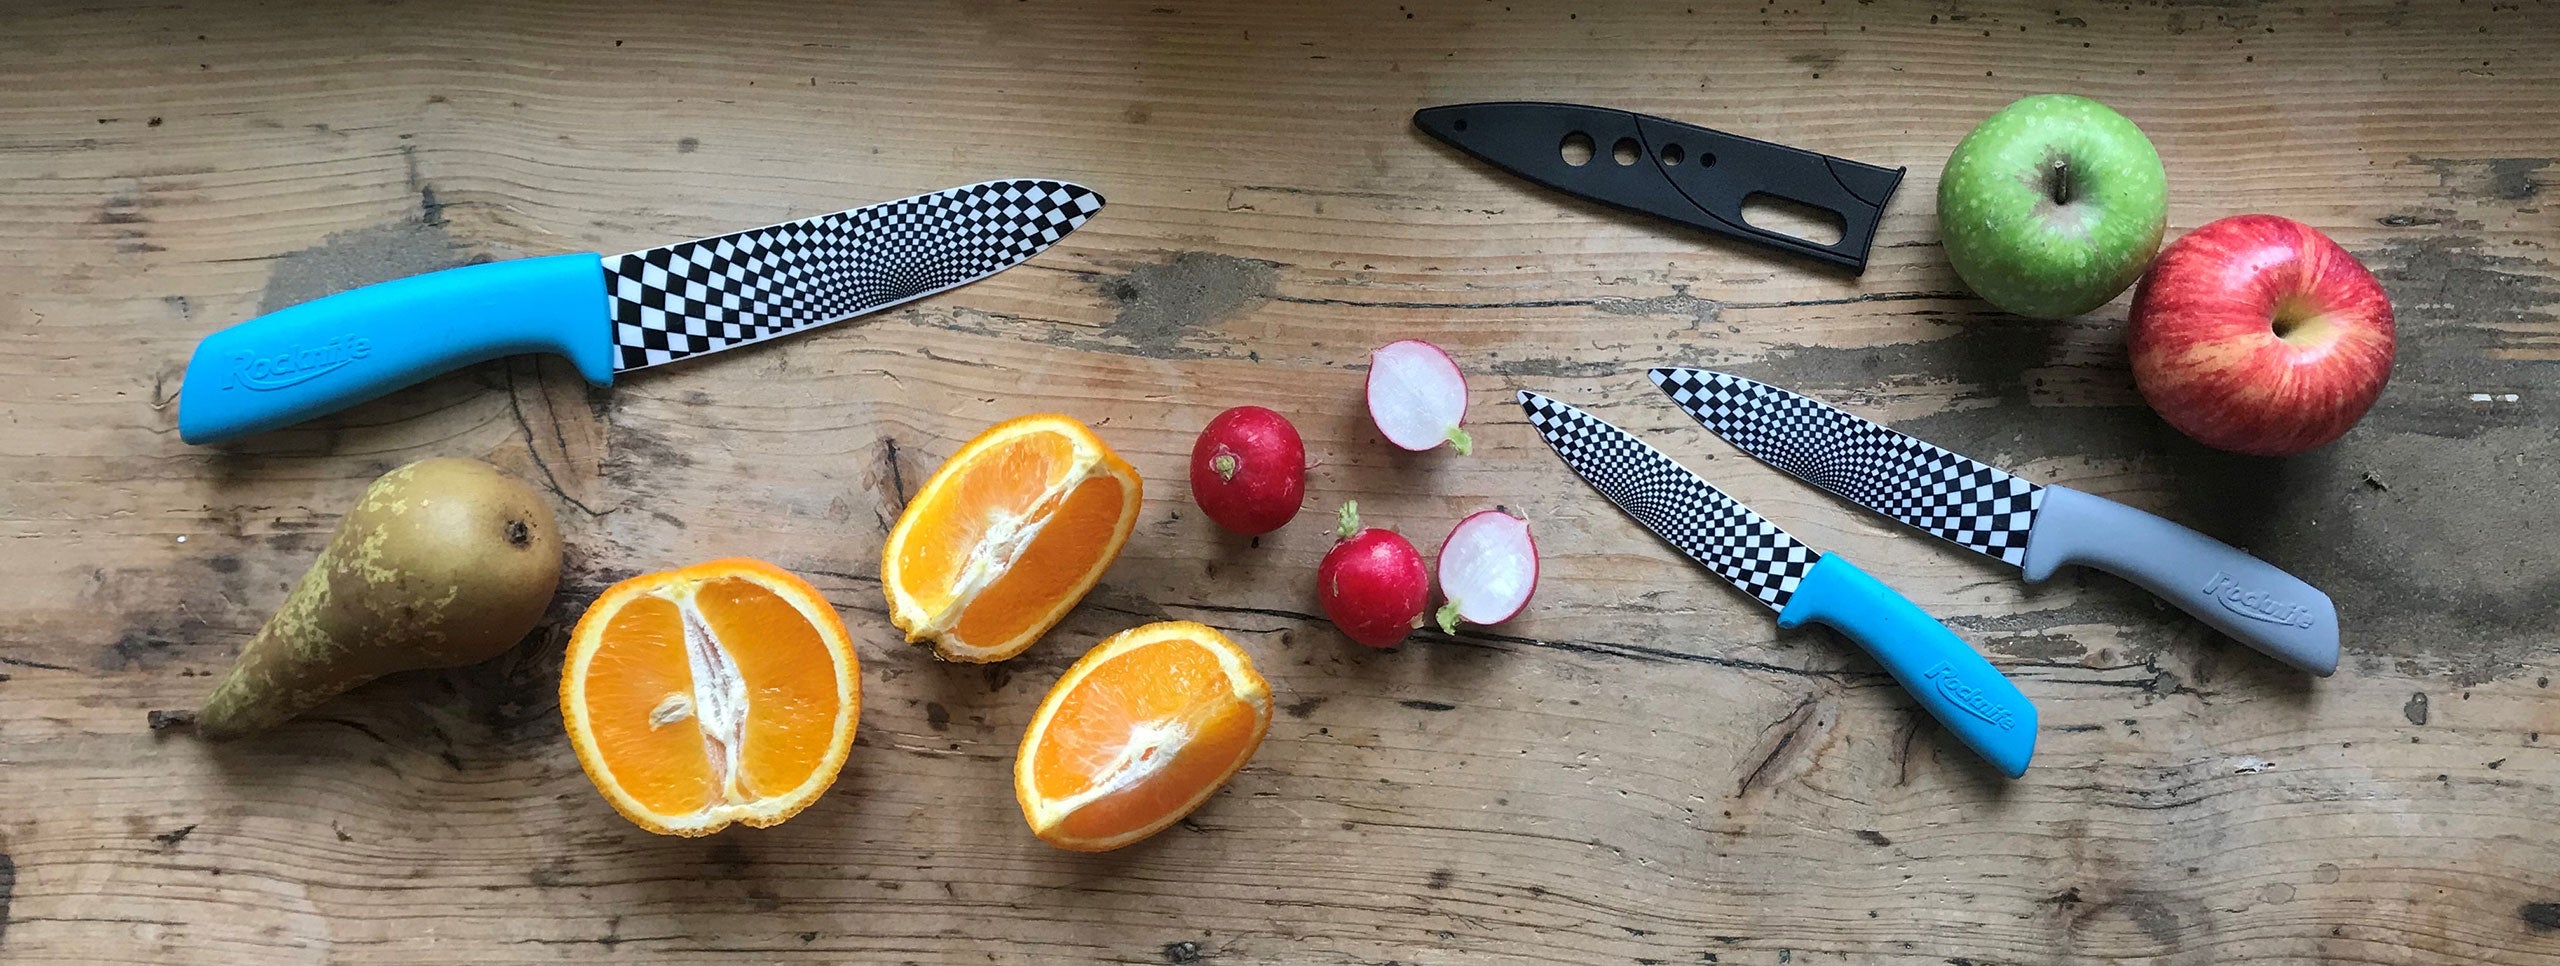 8 Inch Ceramic Kitchen Knife - Pink – Rocknife